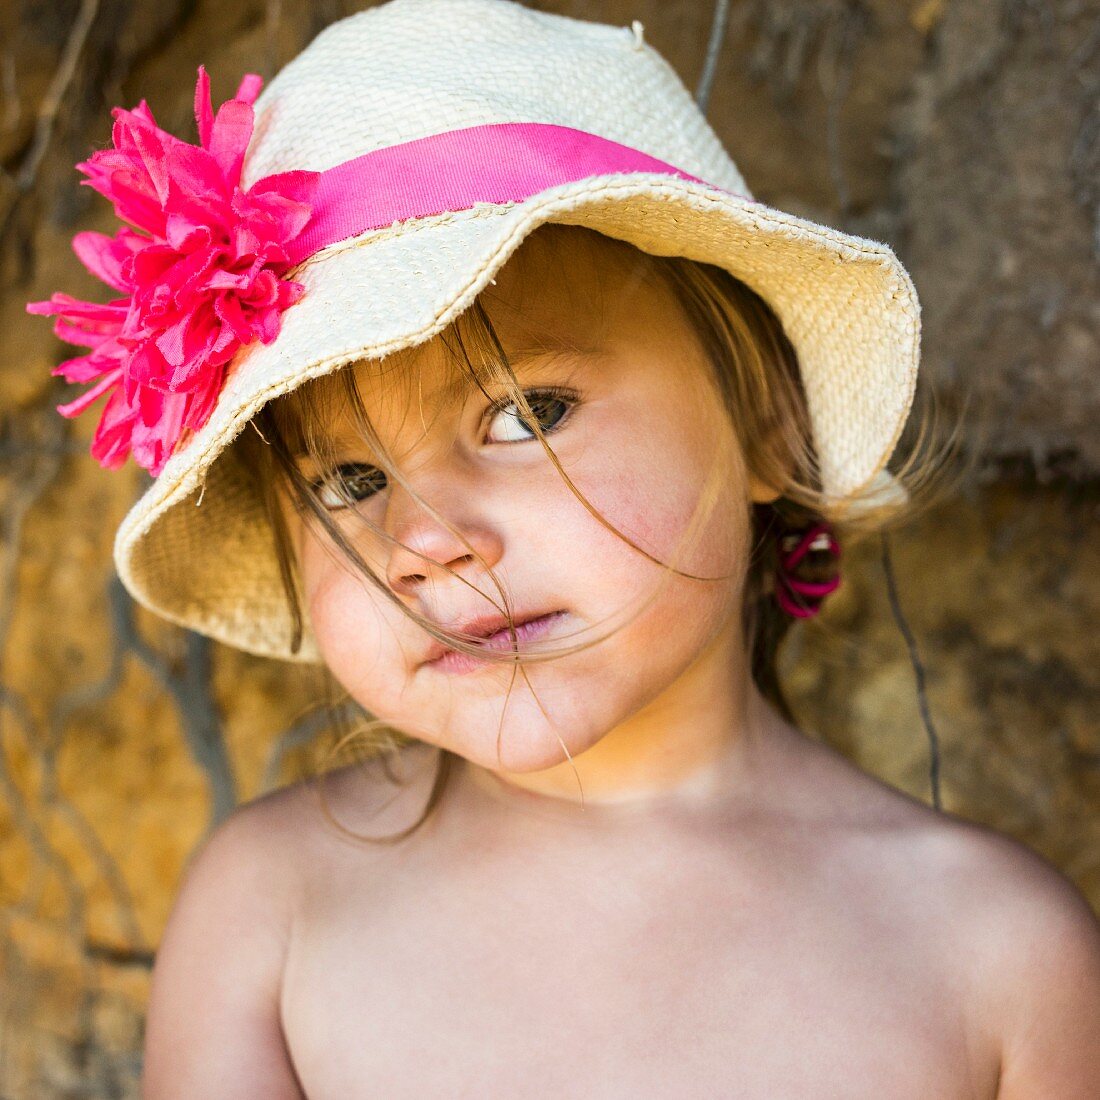 A little girl wearing a straw hat